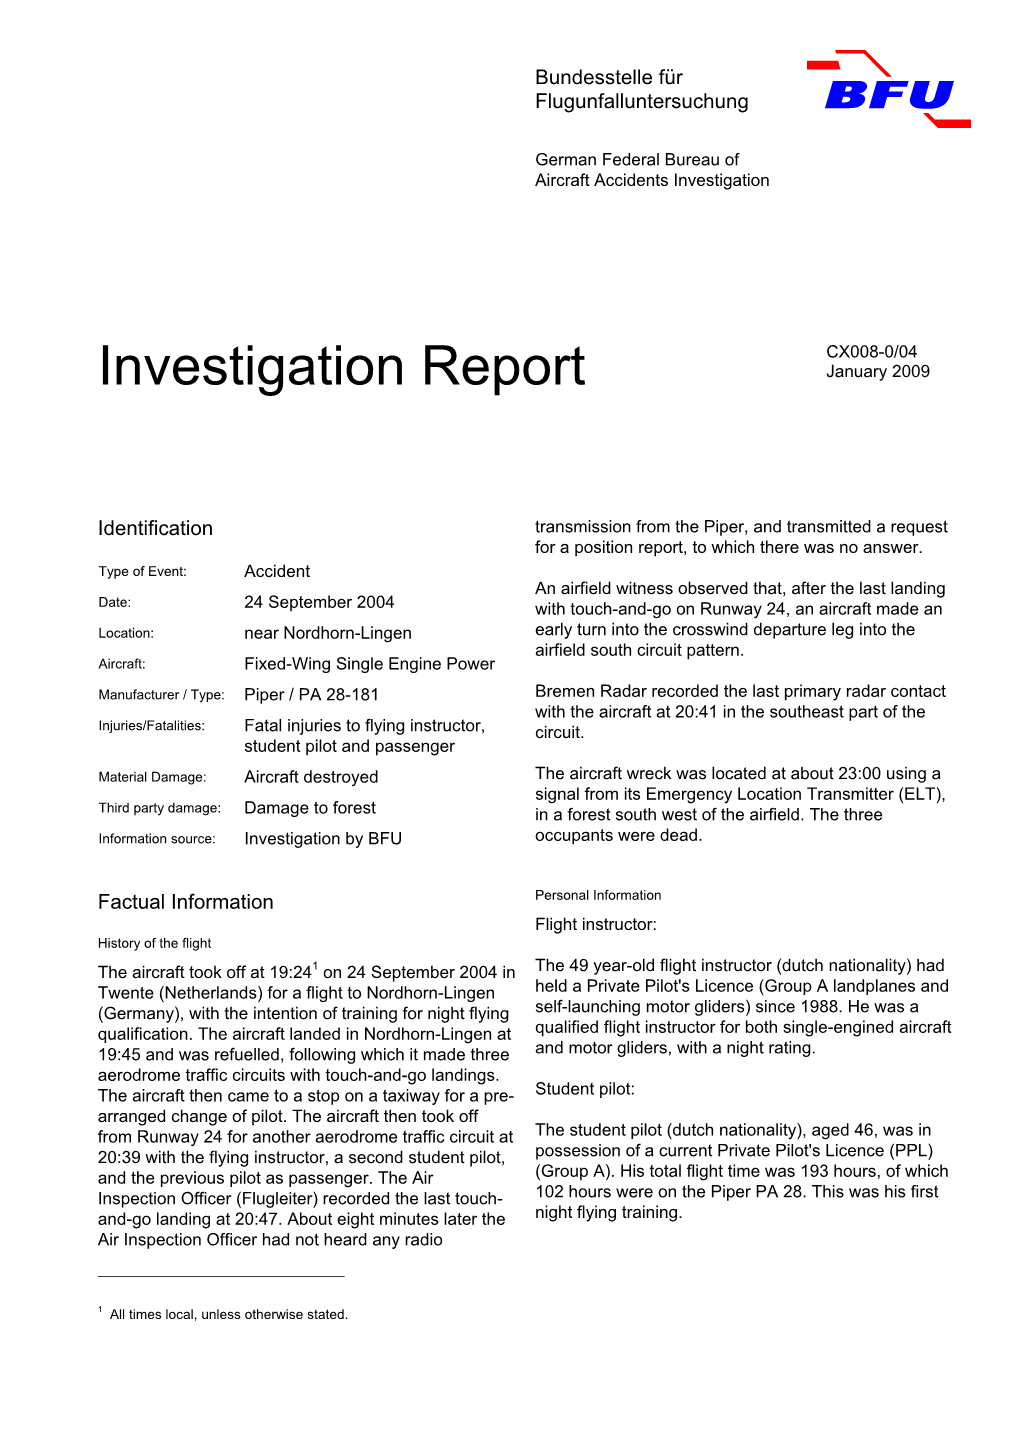 CX008-0/04 Investigation Report January 2009